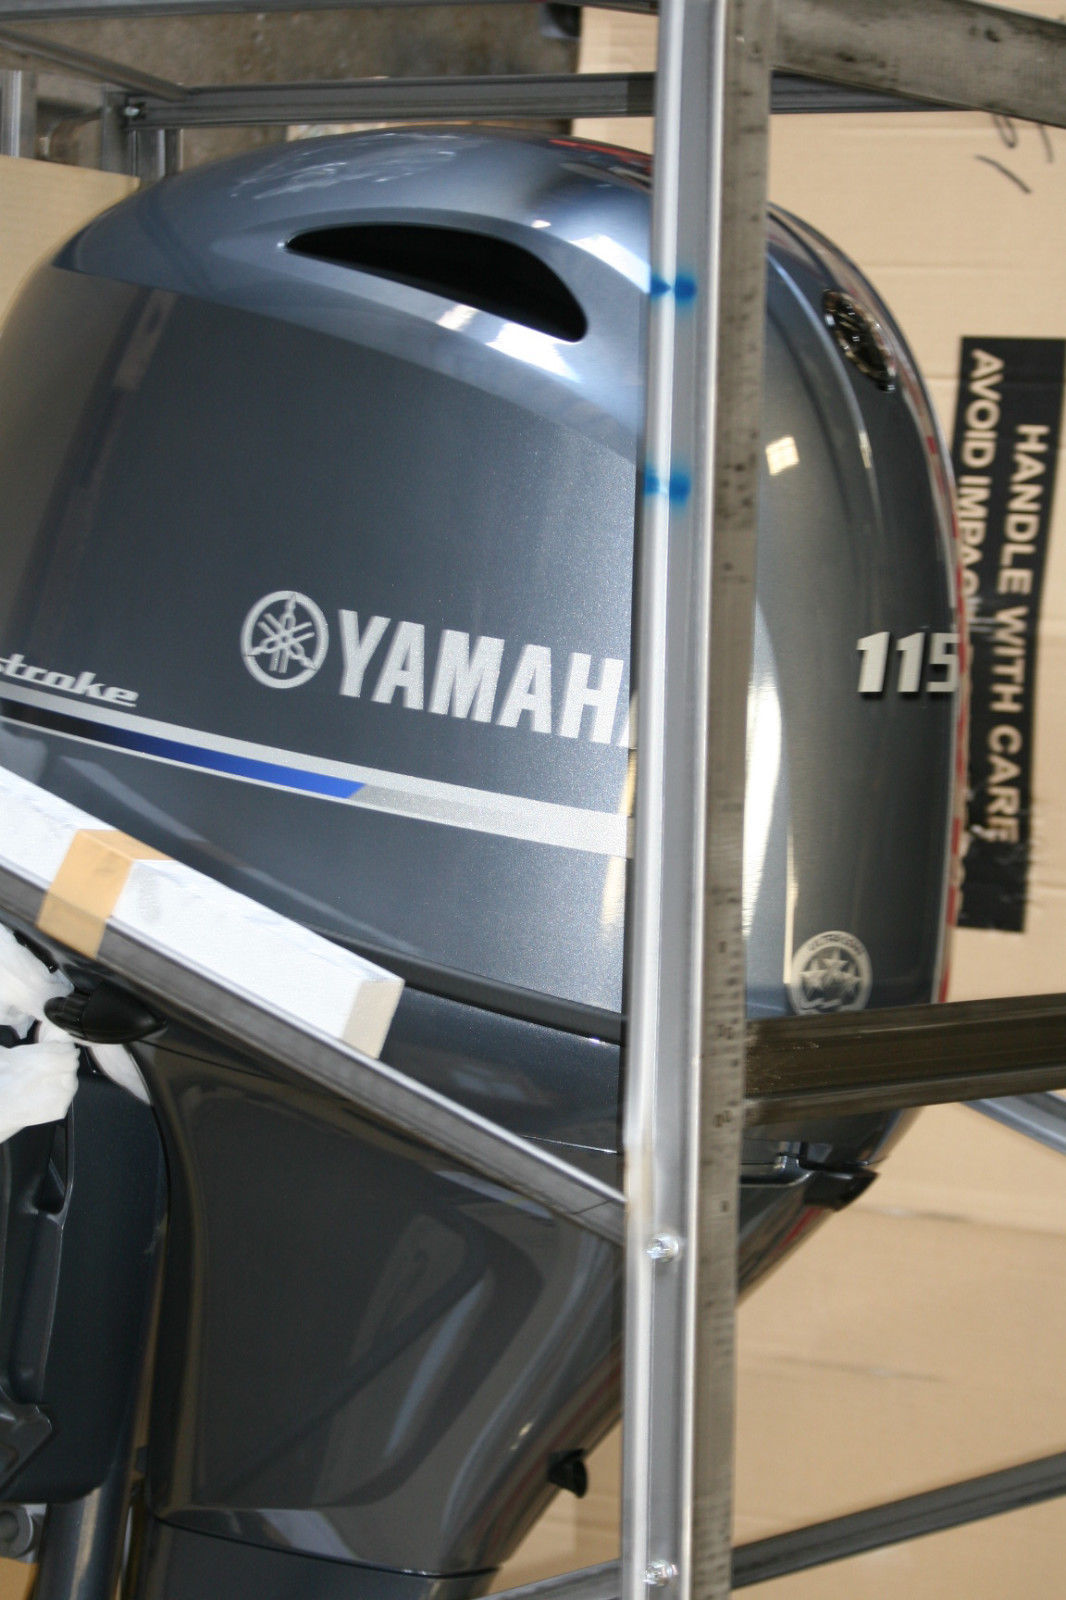 Yamaha 115 HP 4 stroke Outboard Motor Engine….$3500 USD